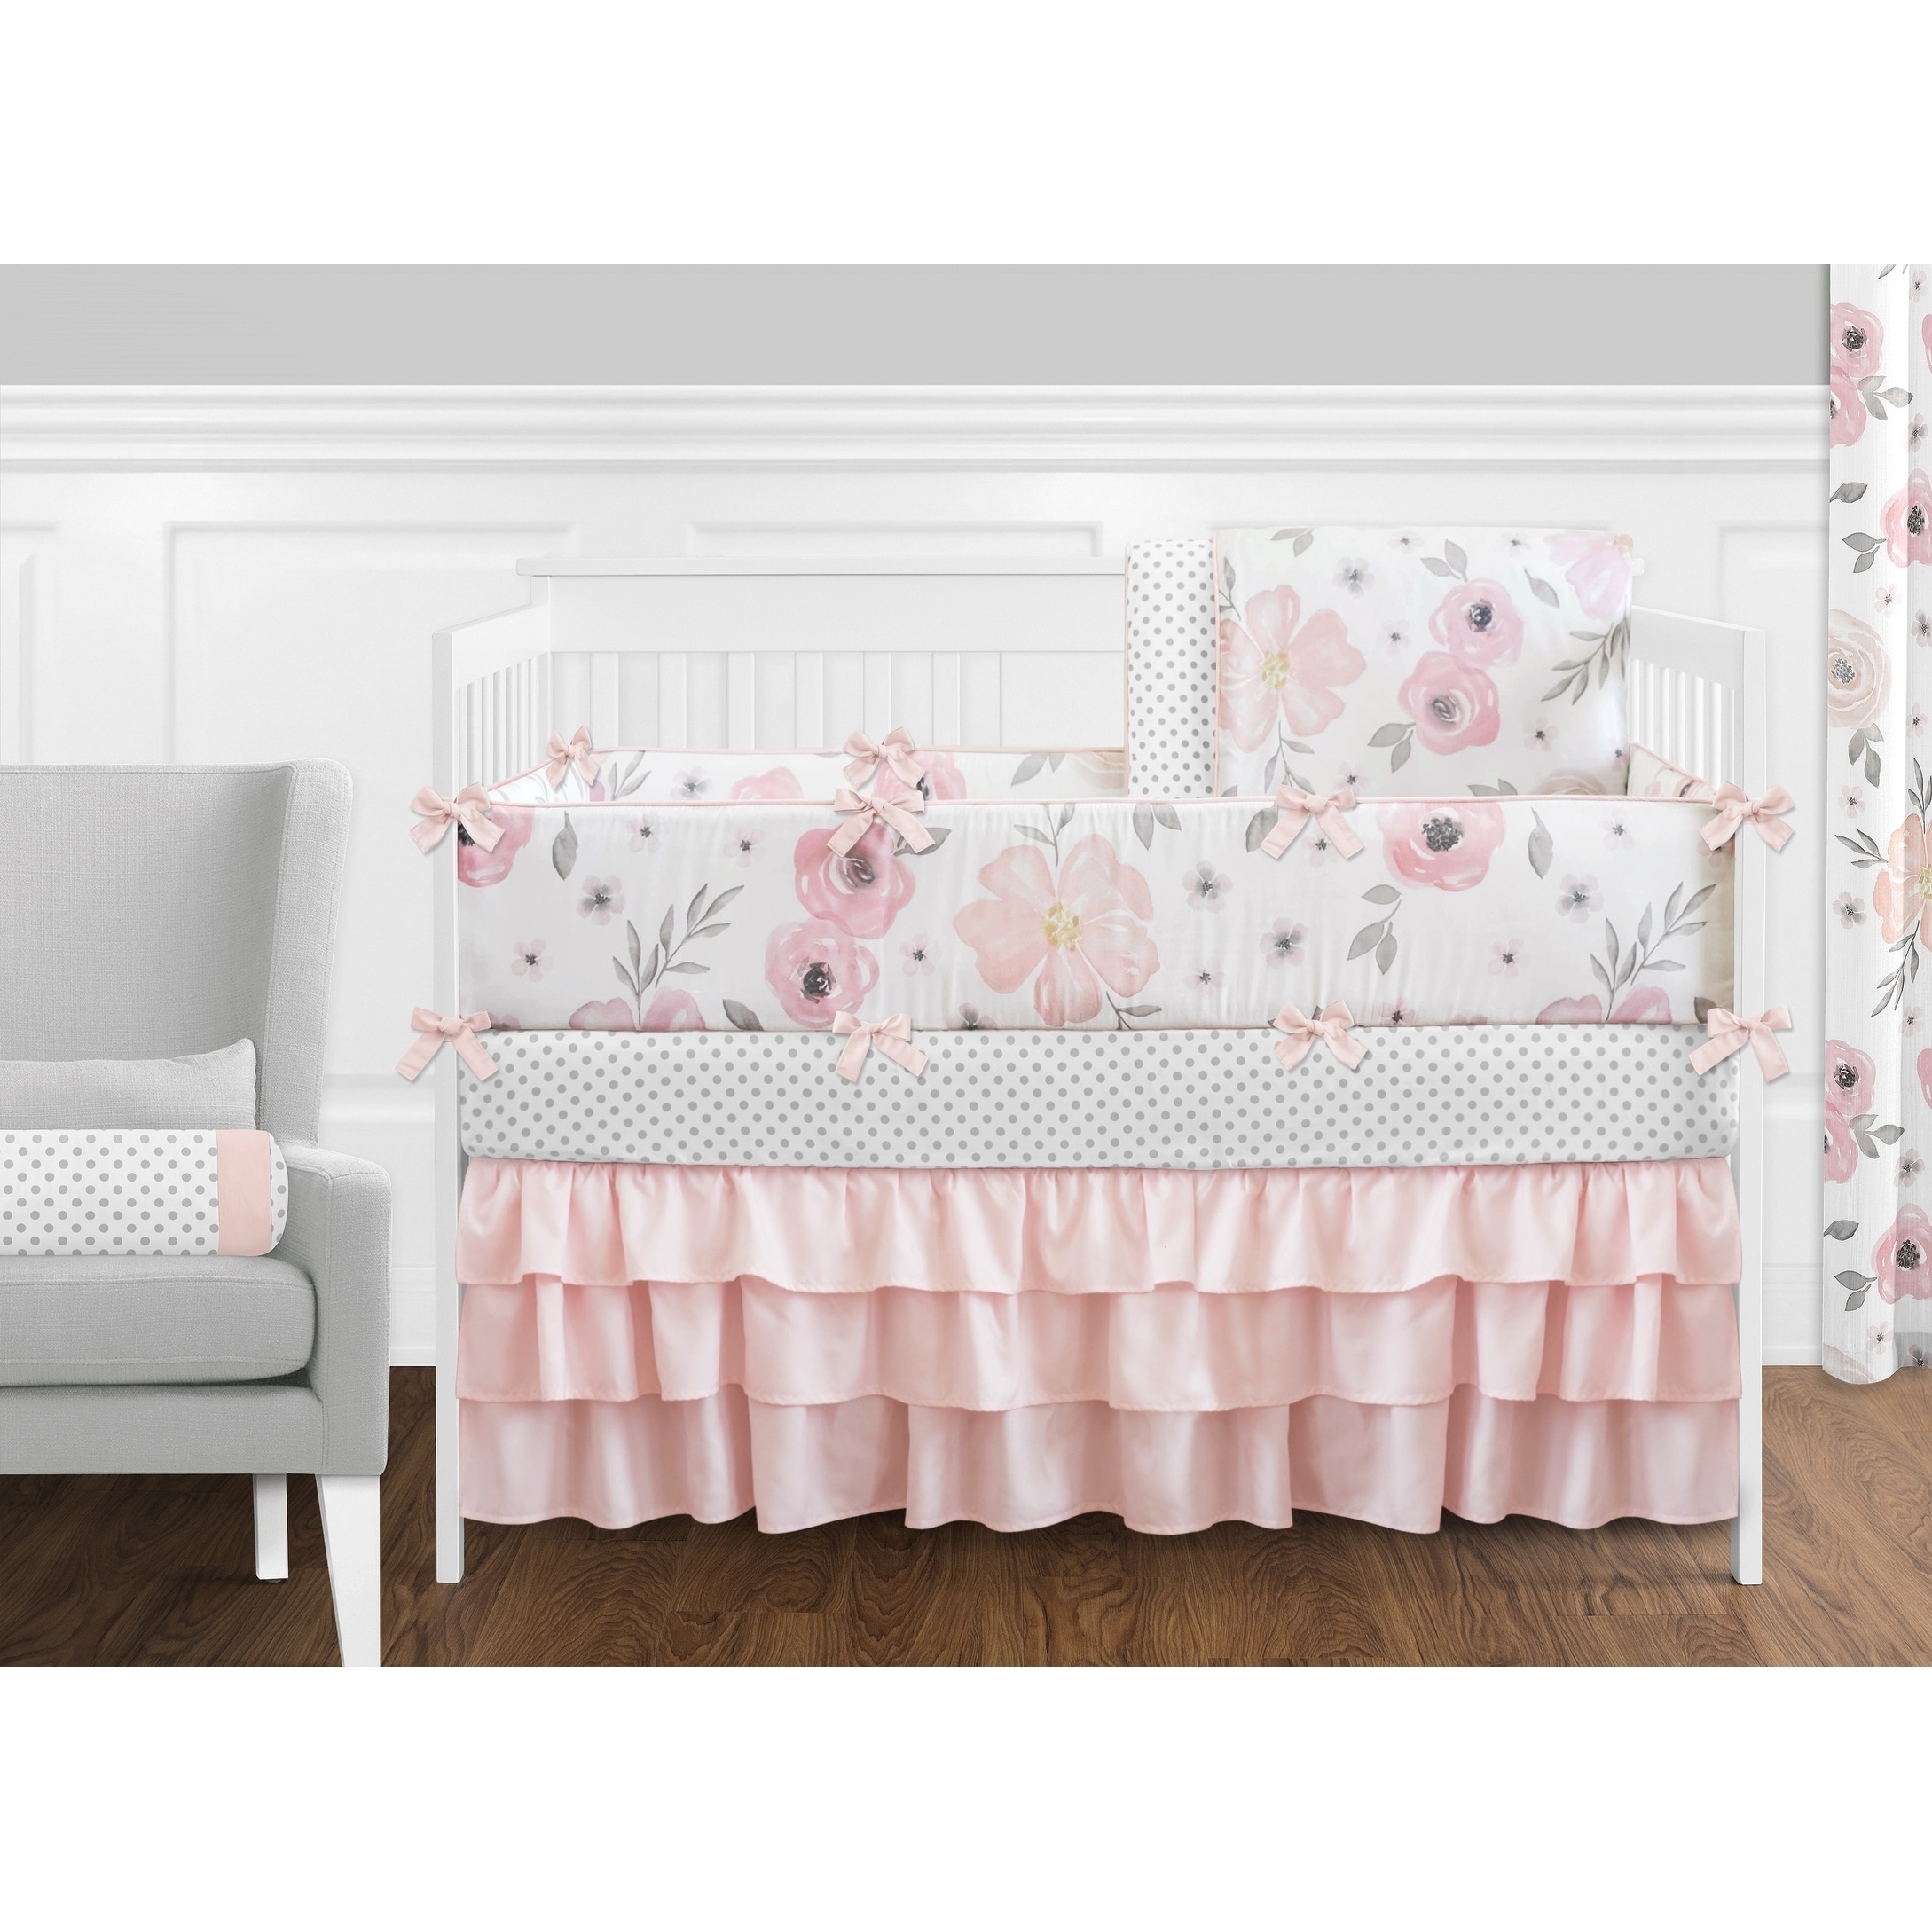 flower crib bedding sets